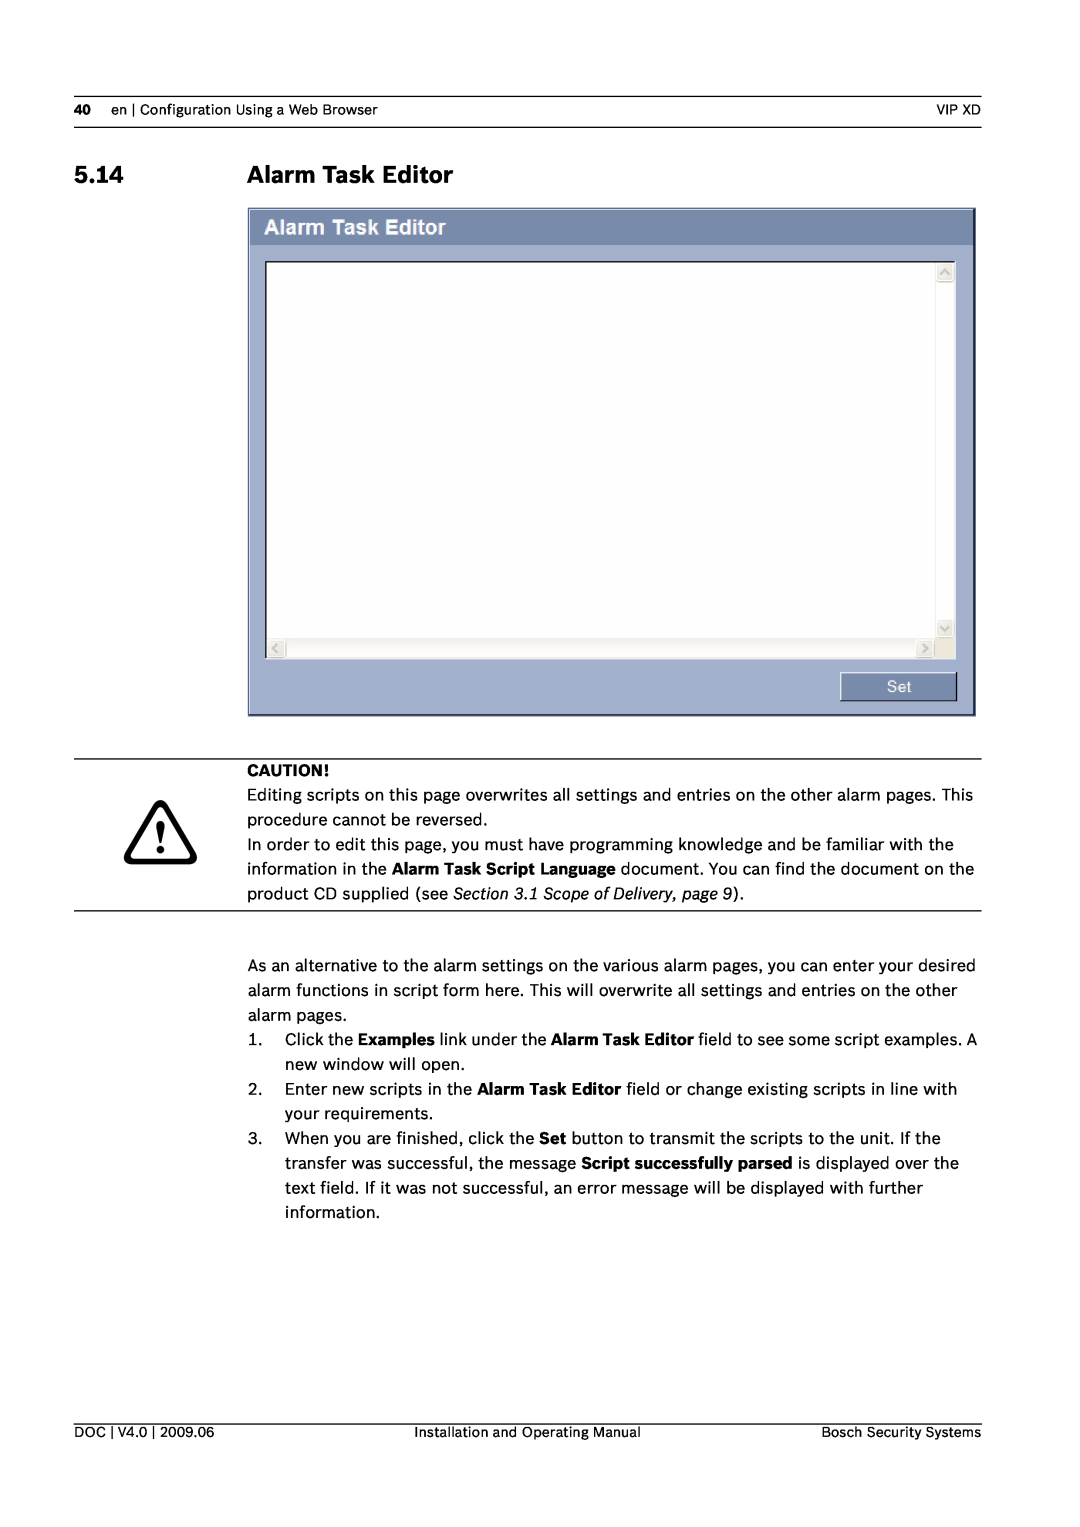 Bosch Appliances XD, VIP manual 5.14, Alarm Task Editor 